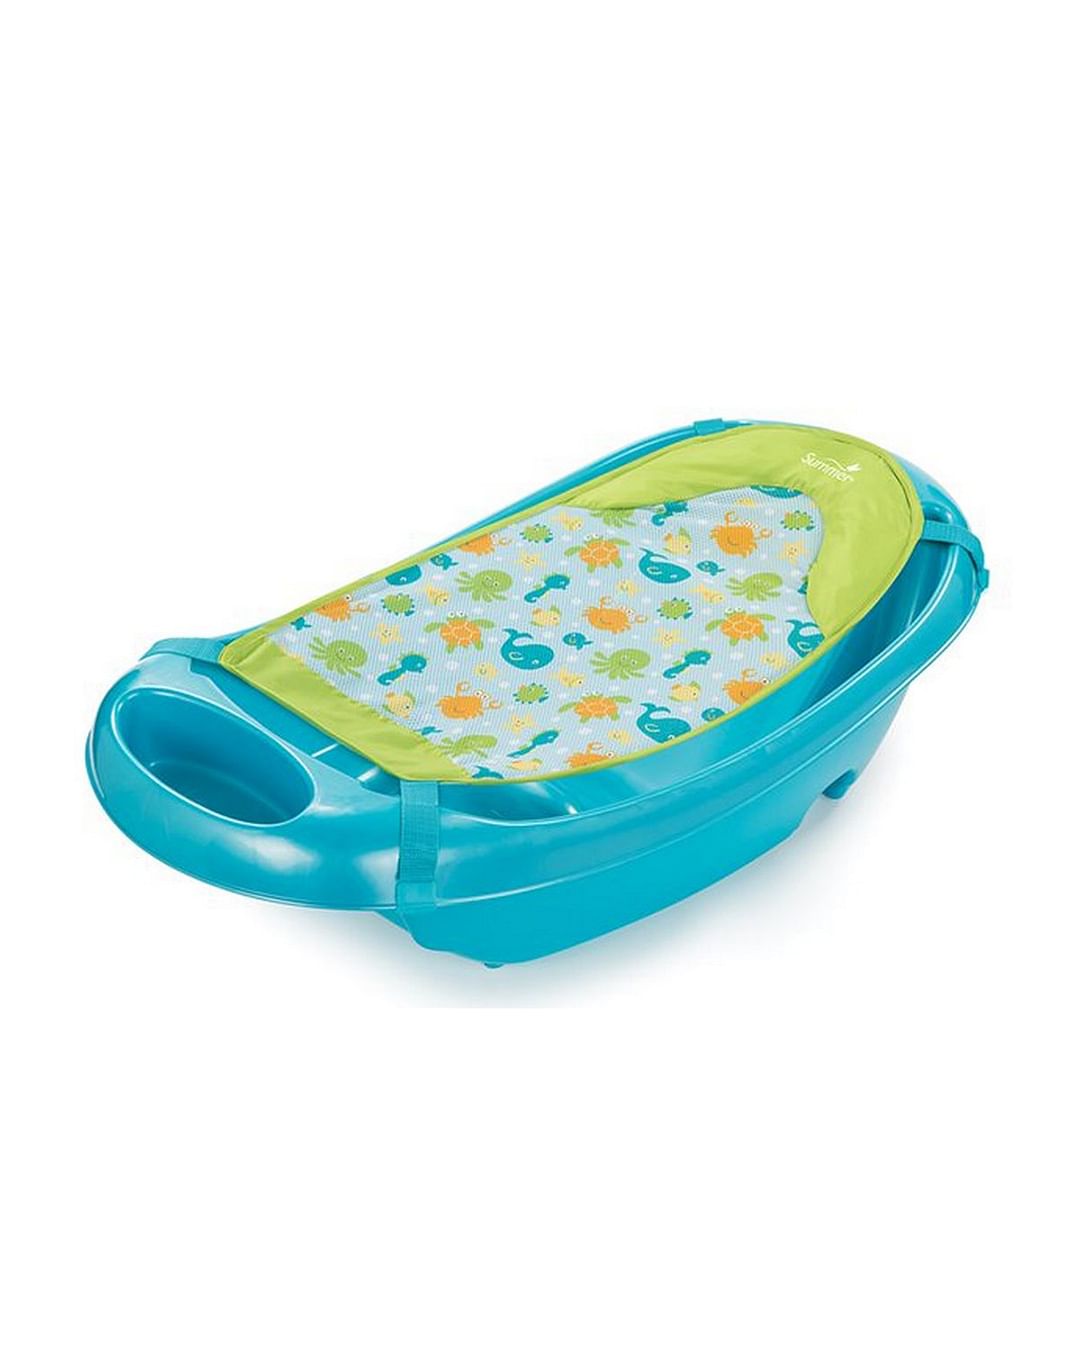 Splish 'N Splash Newborn To Toddler Tub - Blue | Summer Infant